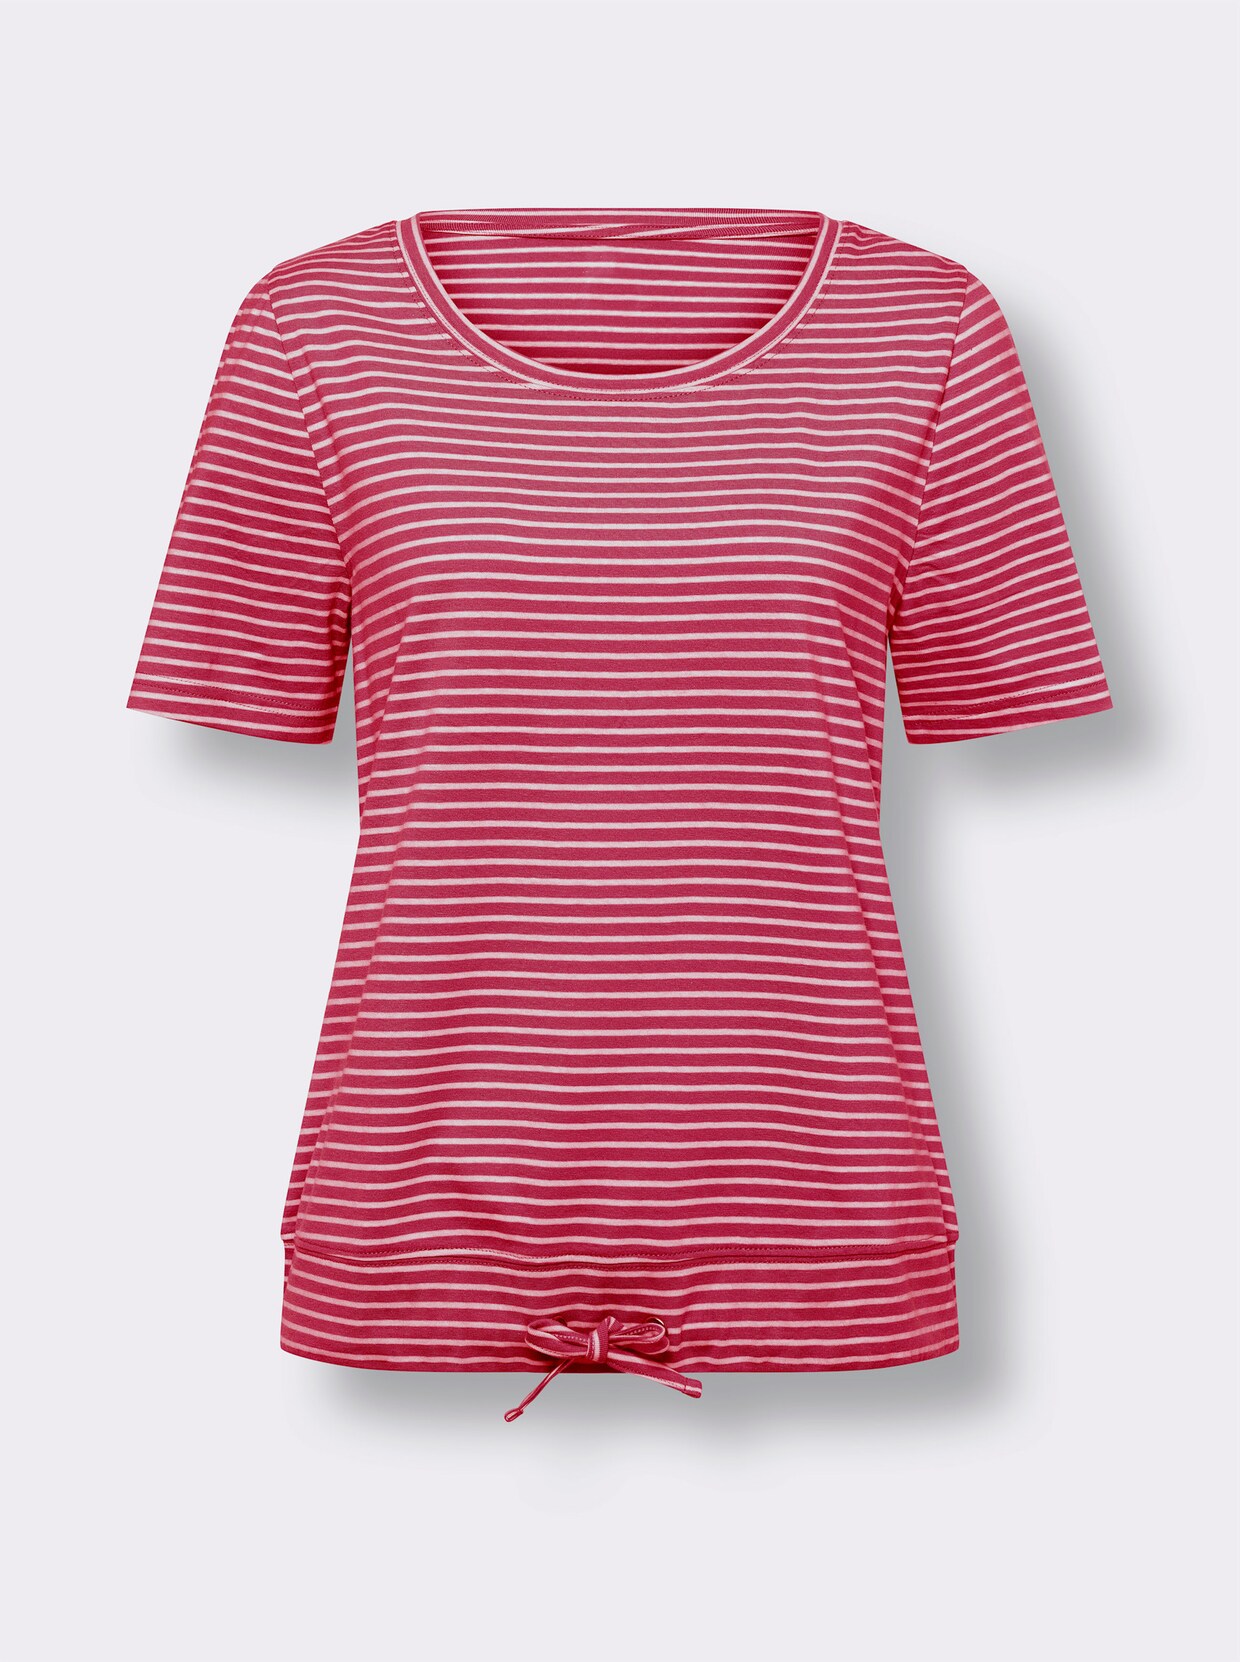 Kurzarm-Shirt - rot-weiß-geringelt